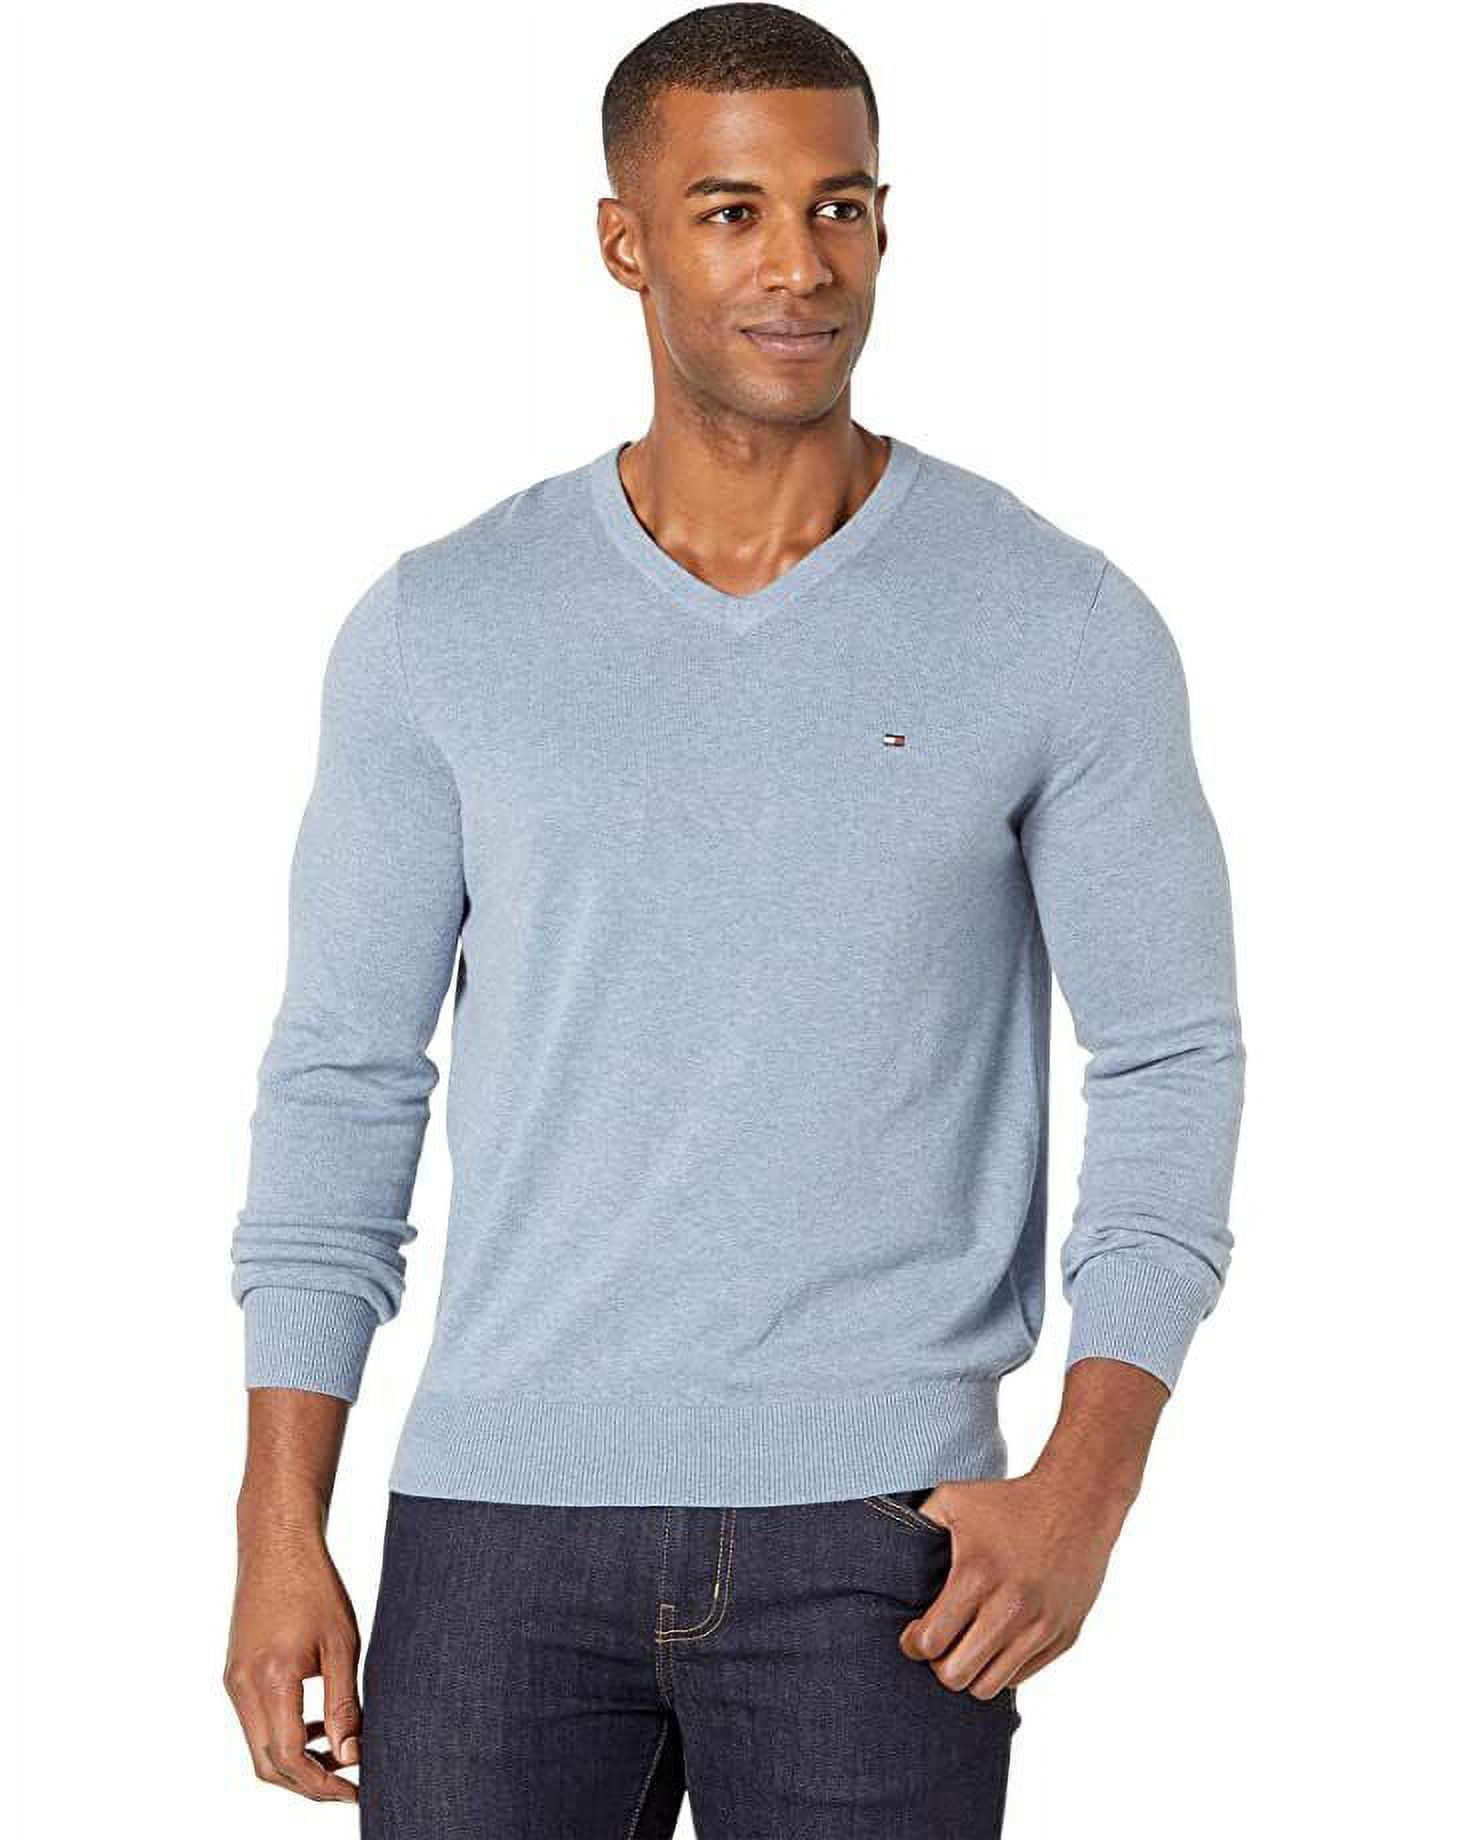 Blue-Small Men\'s Captains Sweater Signature Hilfiger Tommy V-Neck Cotton Solid